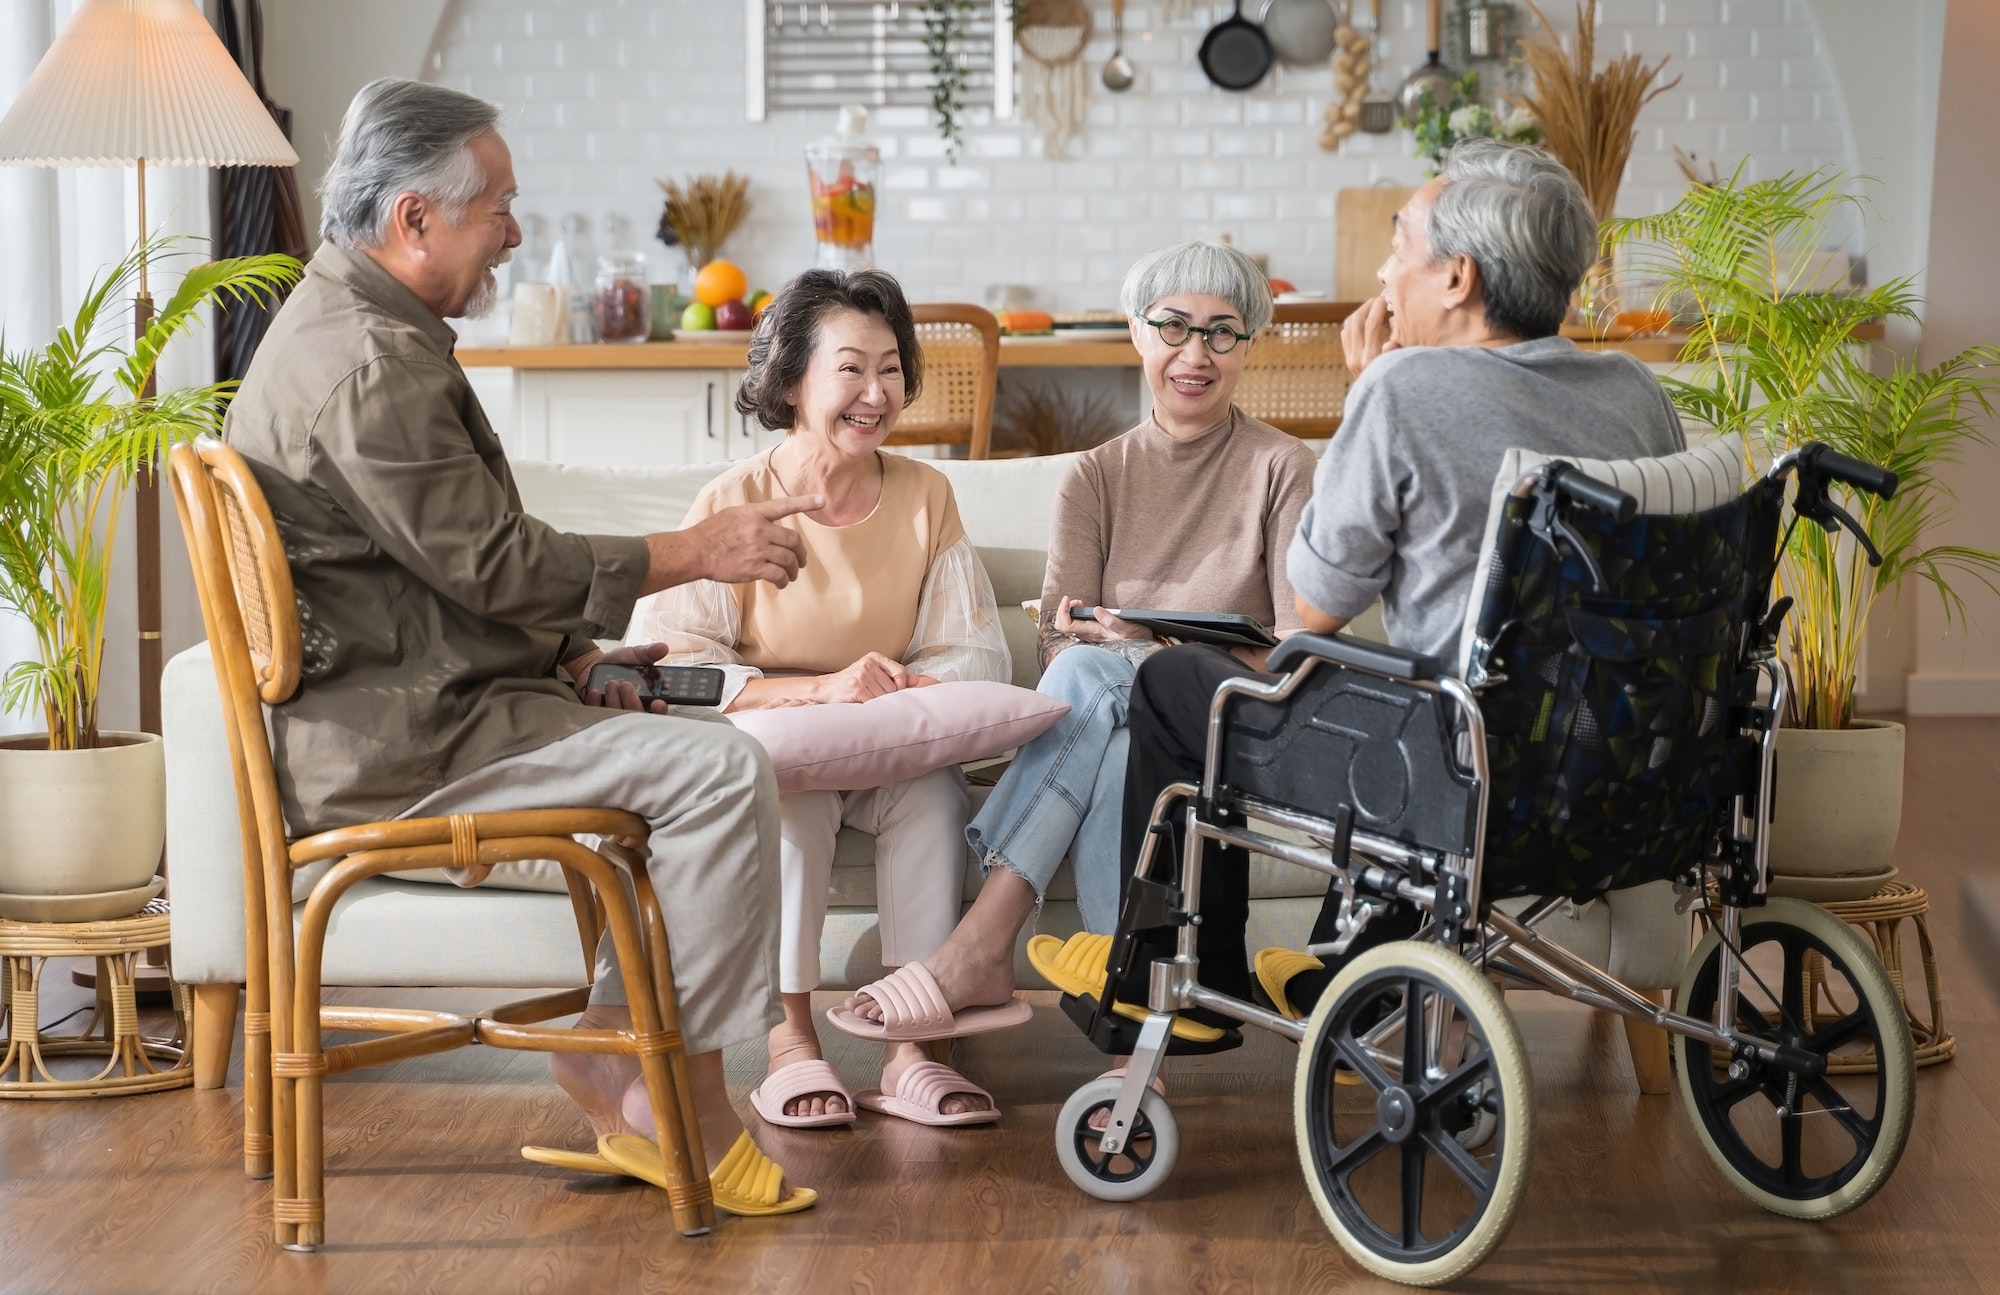 5 Of The Best Senior Living Communities